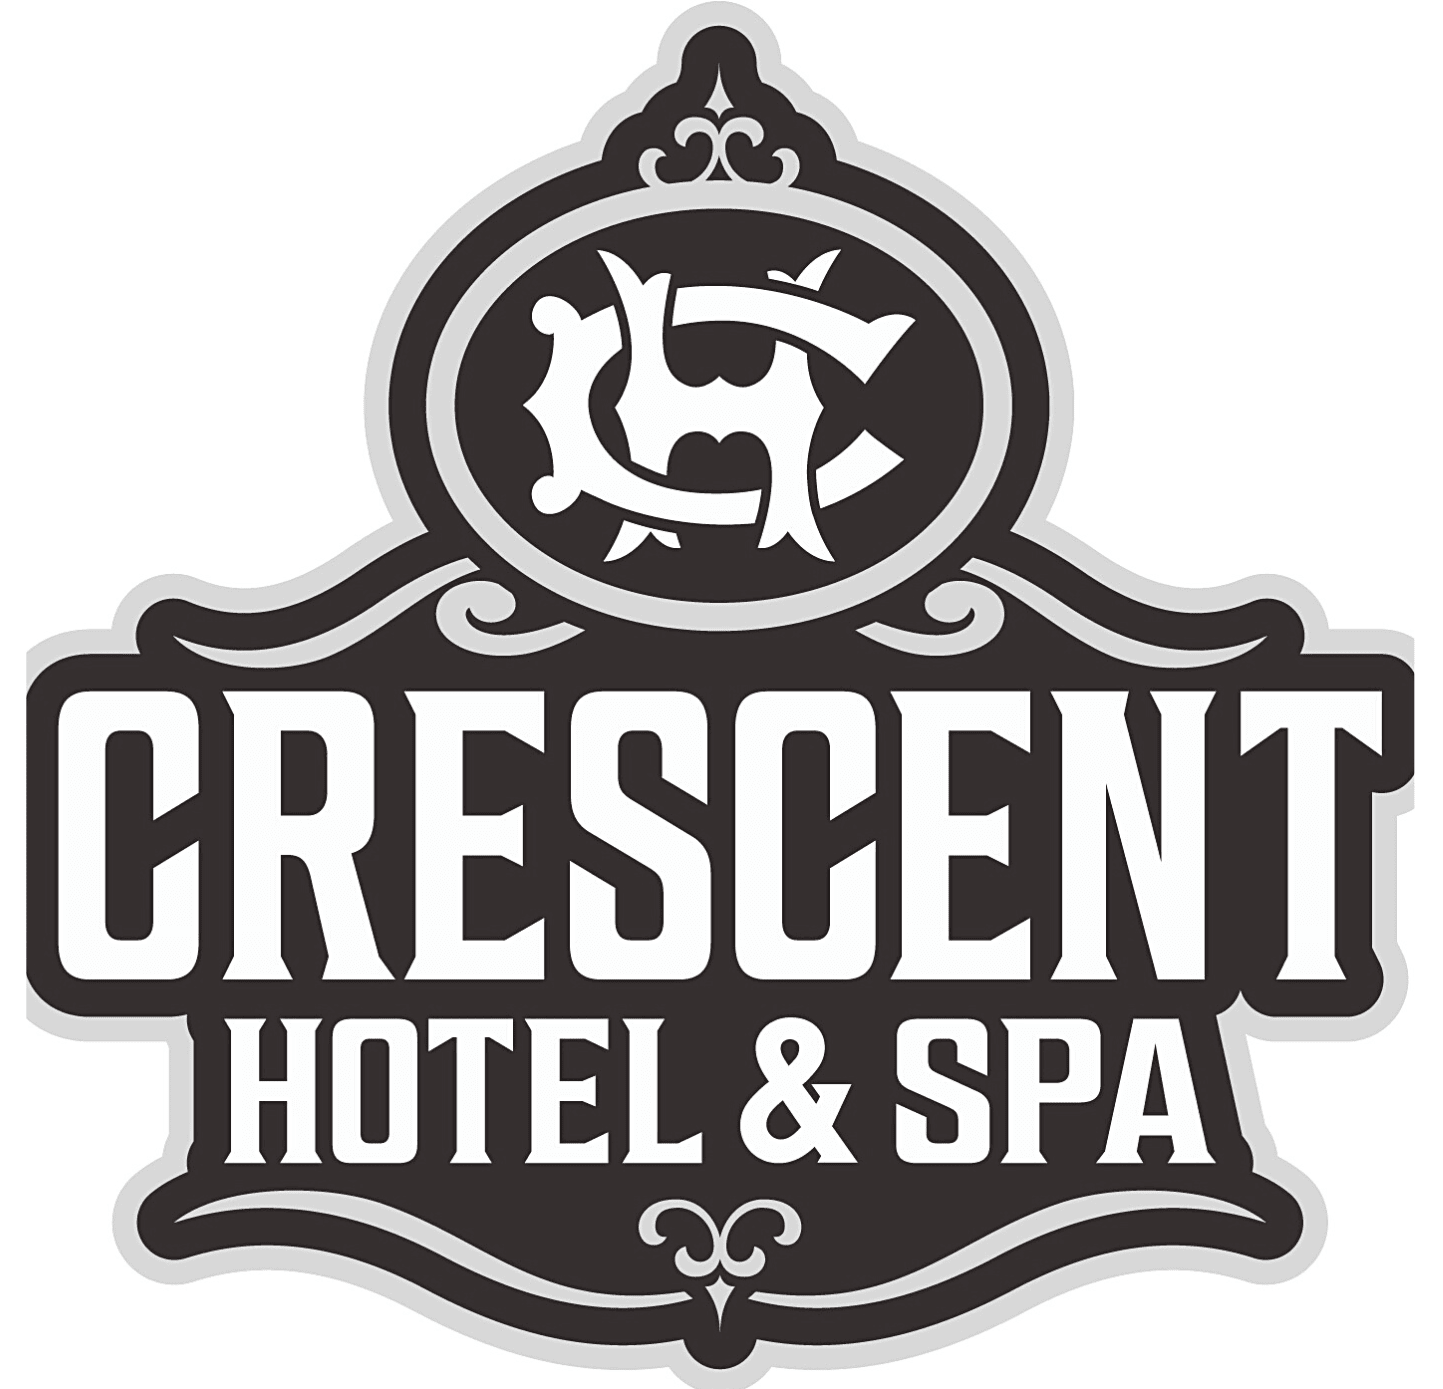 Crescent Hotel logo